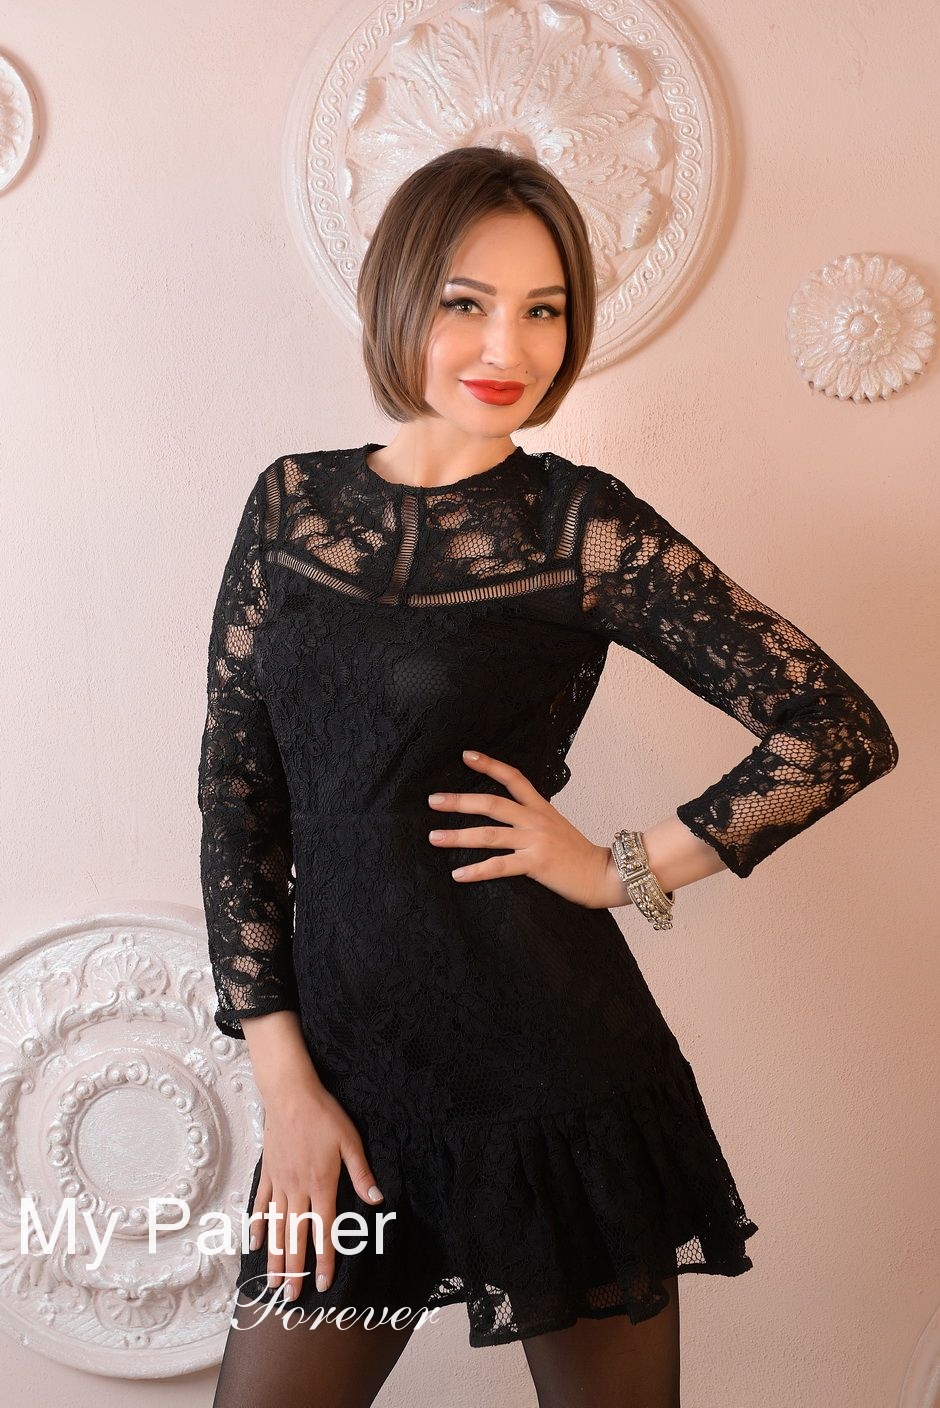 Dating Service to Meet Pretty Ukrainian Girl Mariya from Kharkov, Ukraine